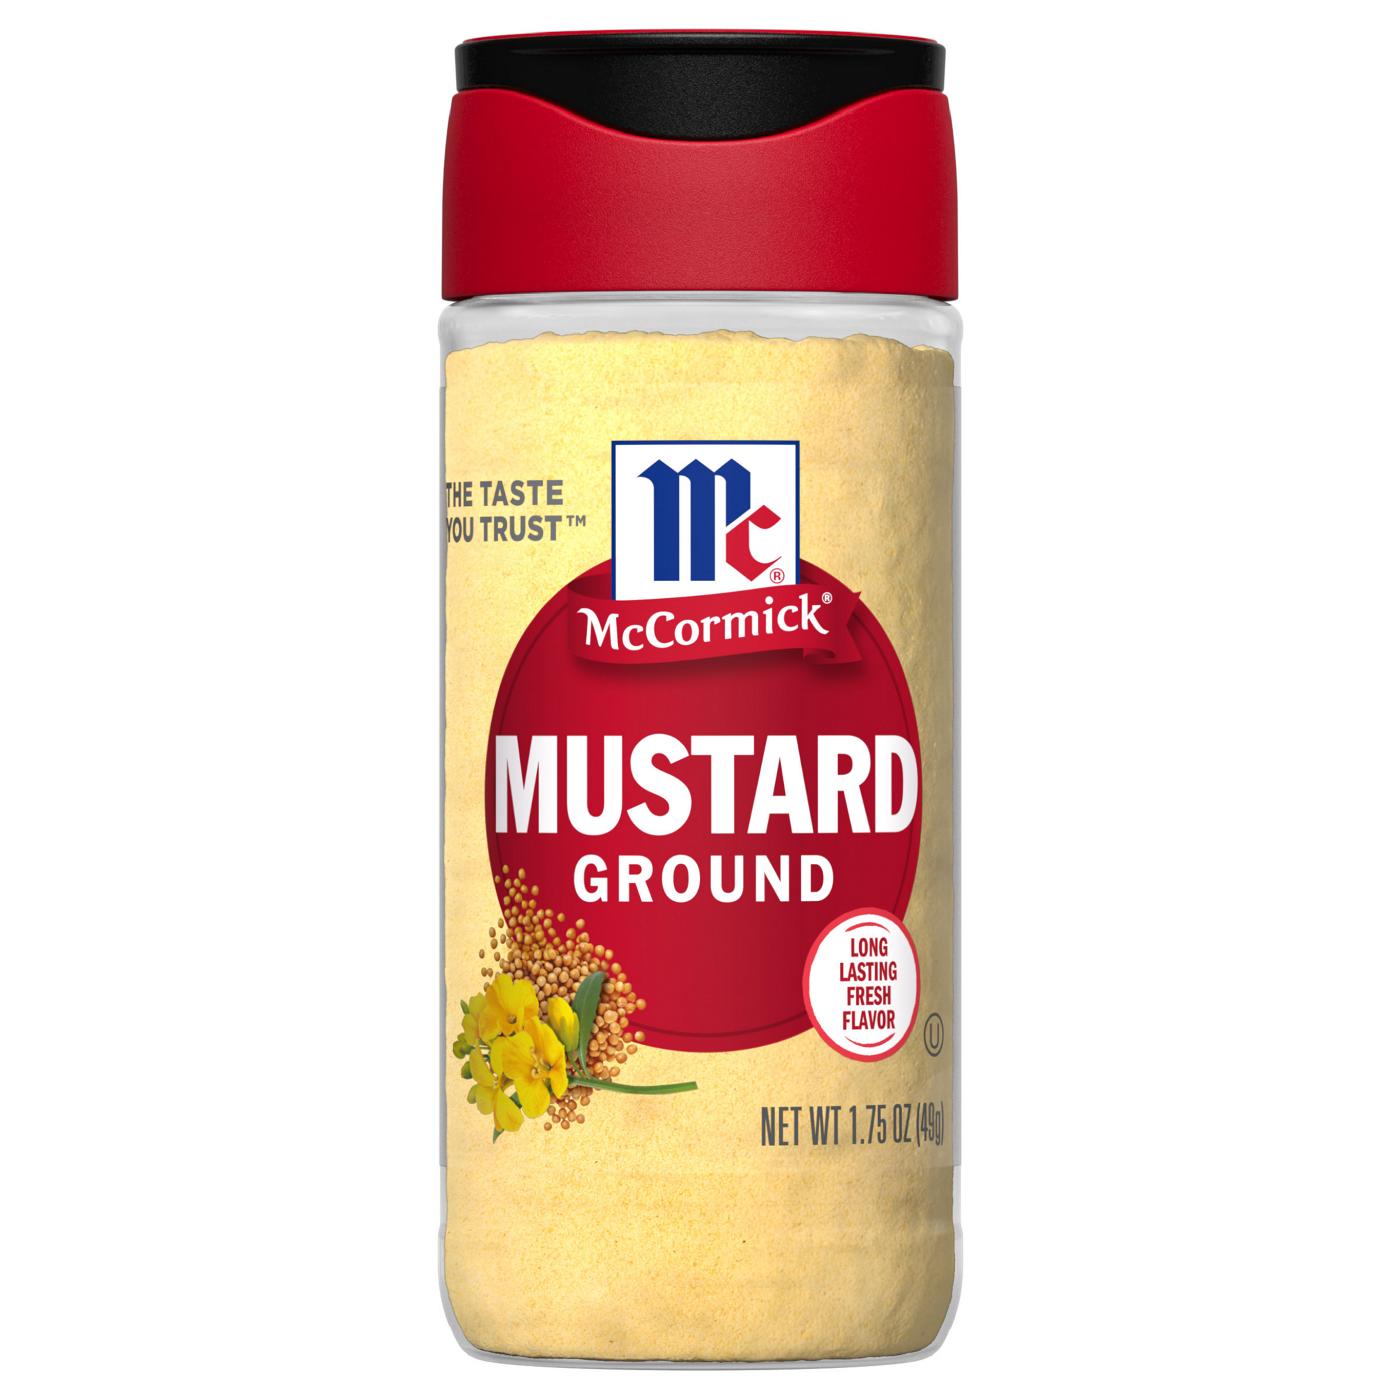 McCormick Ground Mustard; image 1 of 8